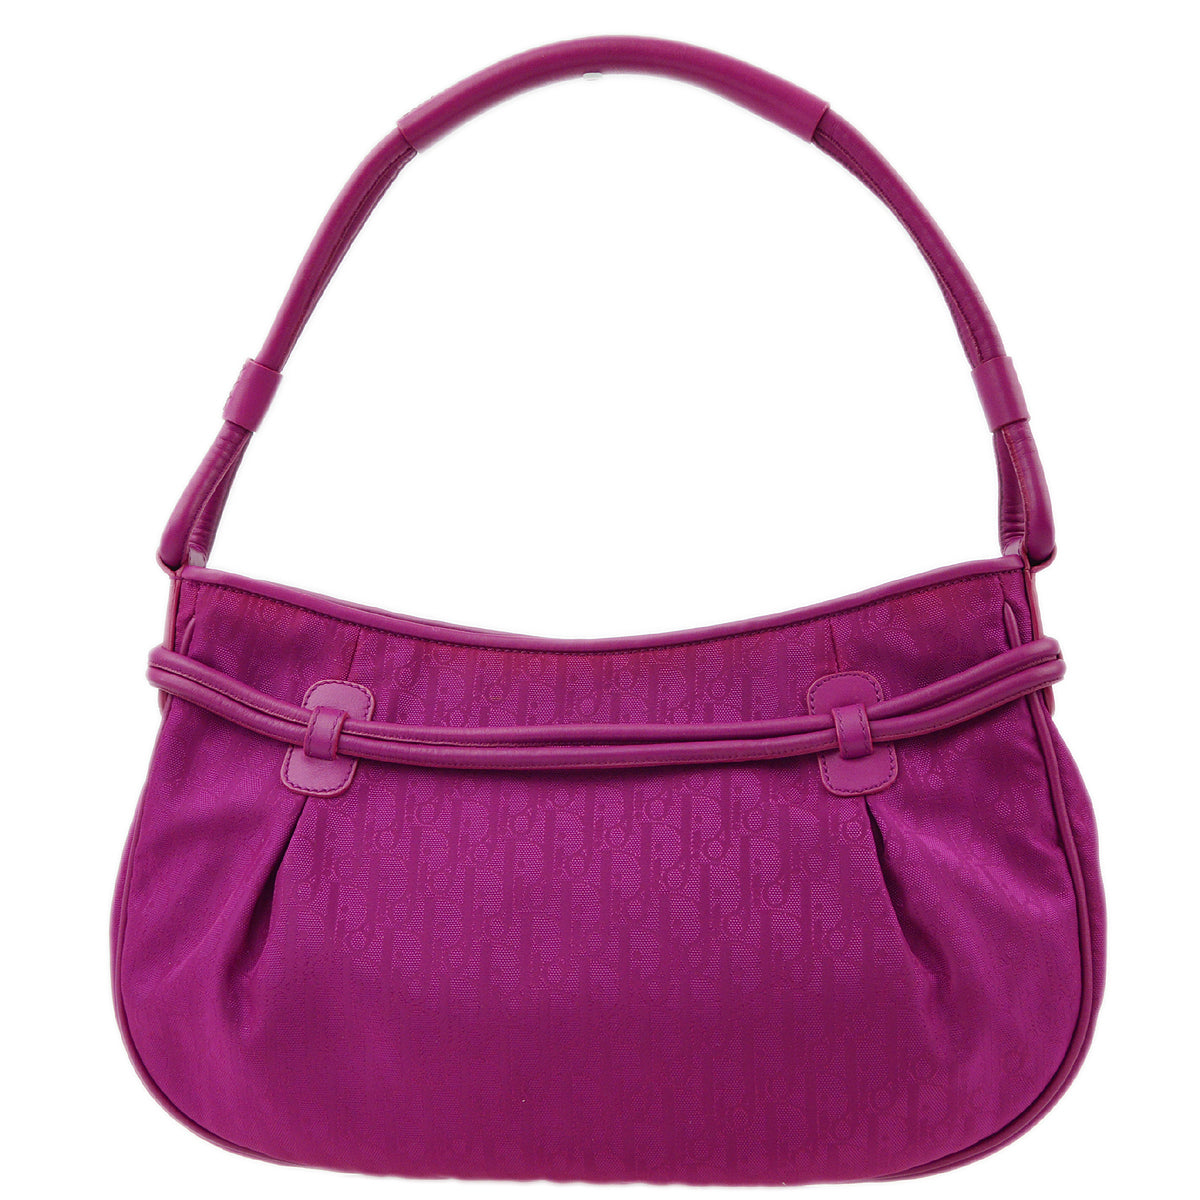 Christian Dior 紫色尼龍豬蹄手提包